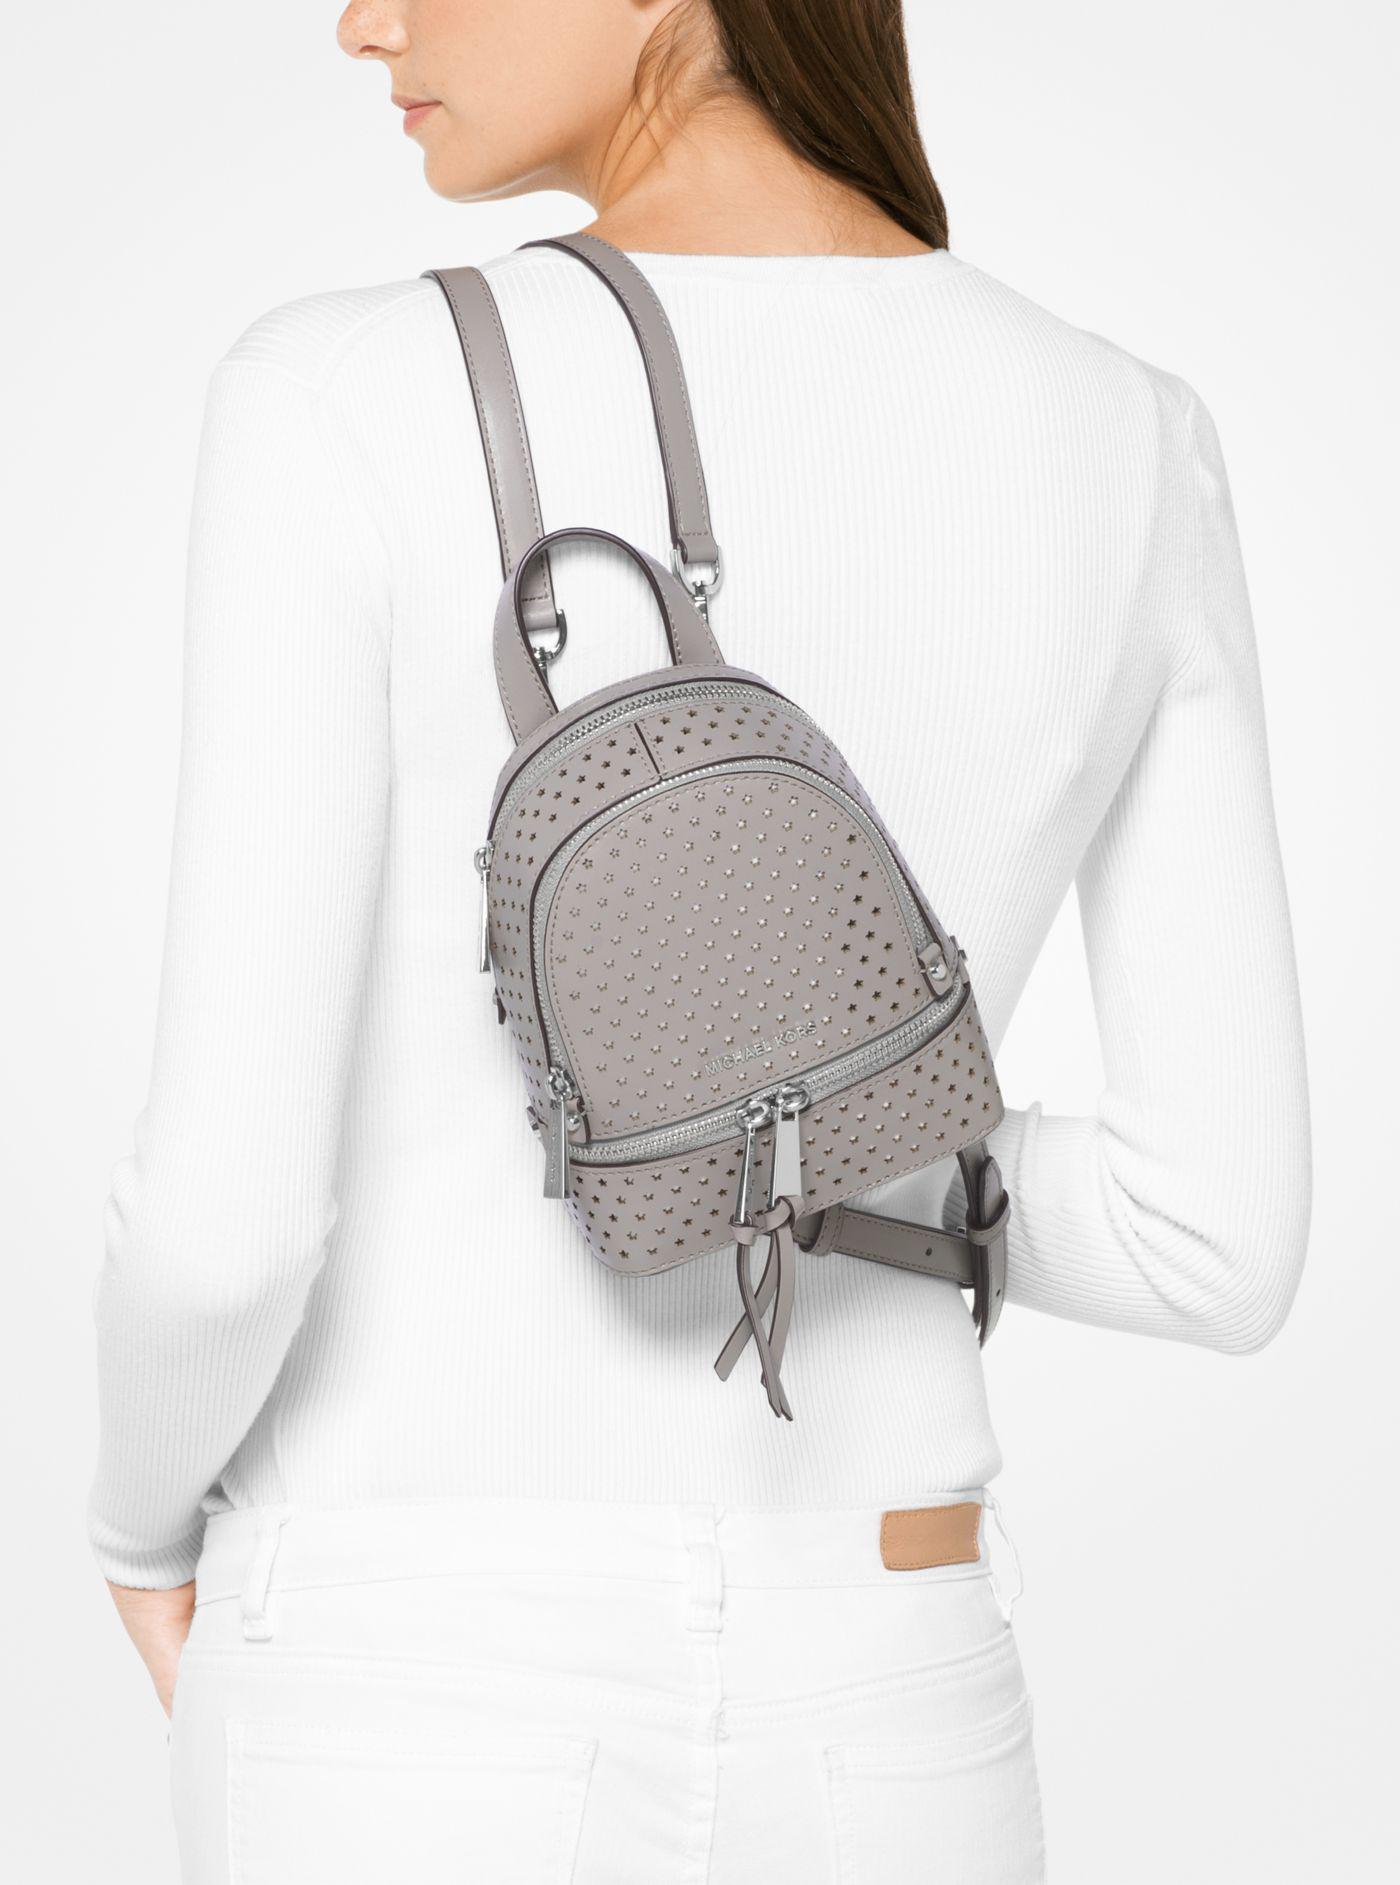 Michael Kors Leather Rhea Mini Perforated Backpack in Pearl Grey (Gray ...